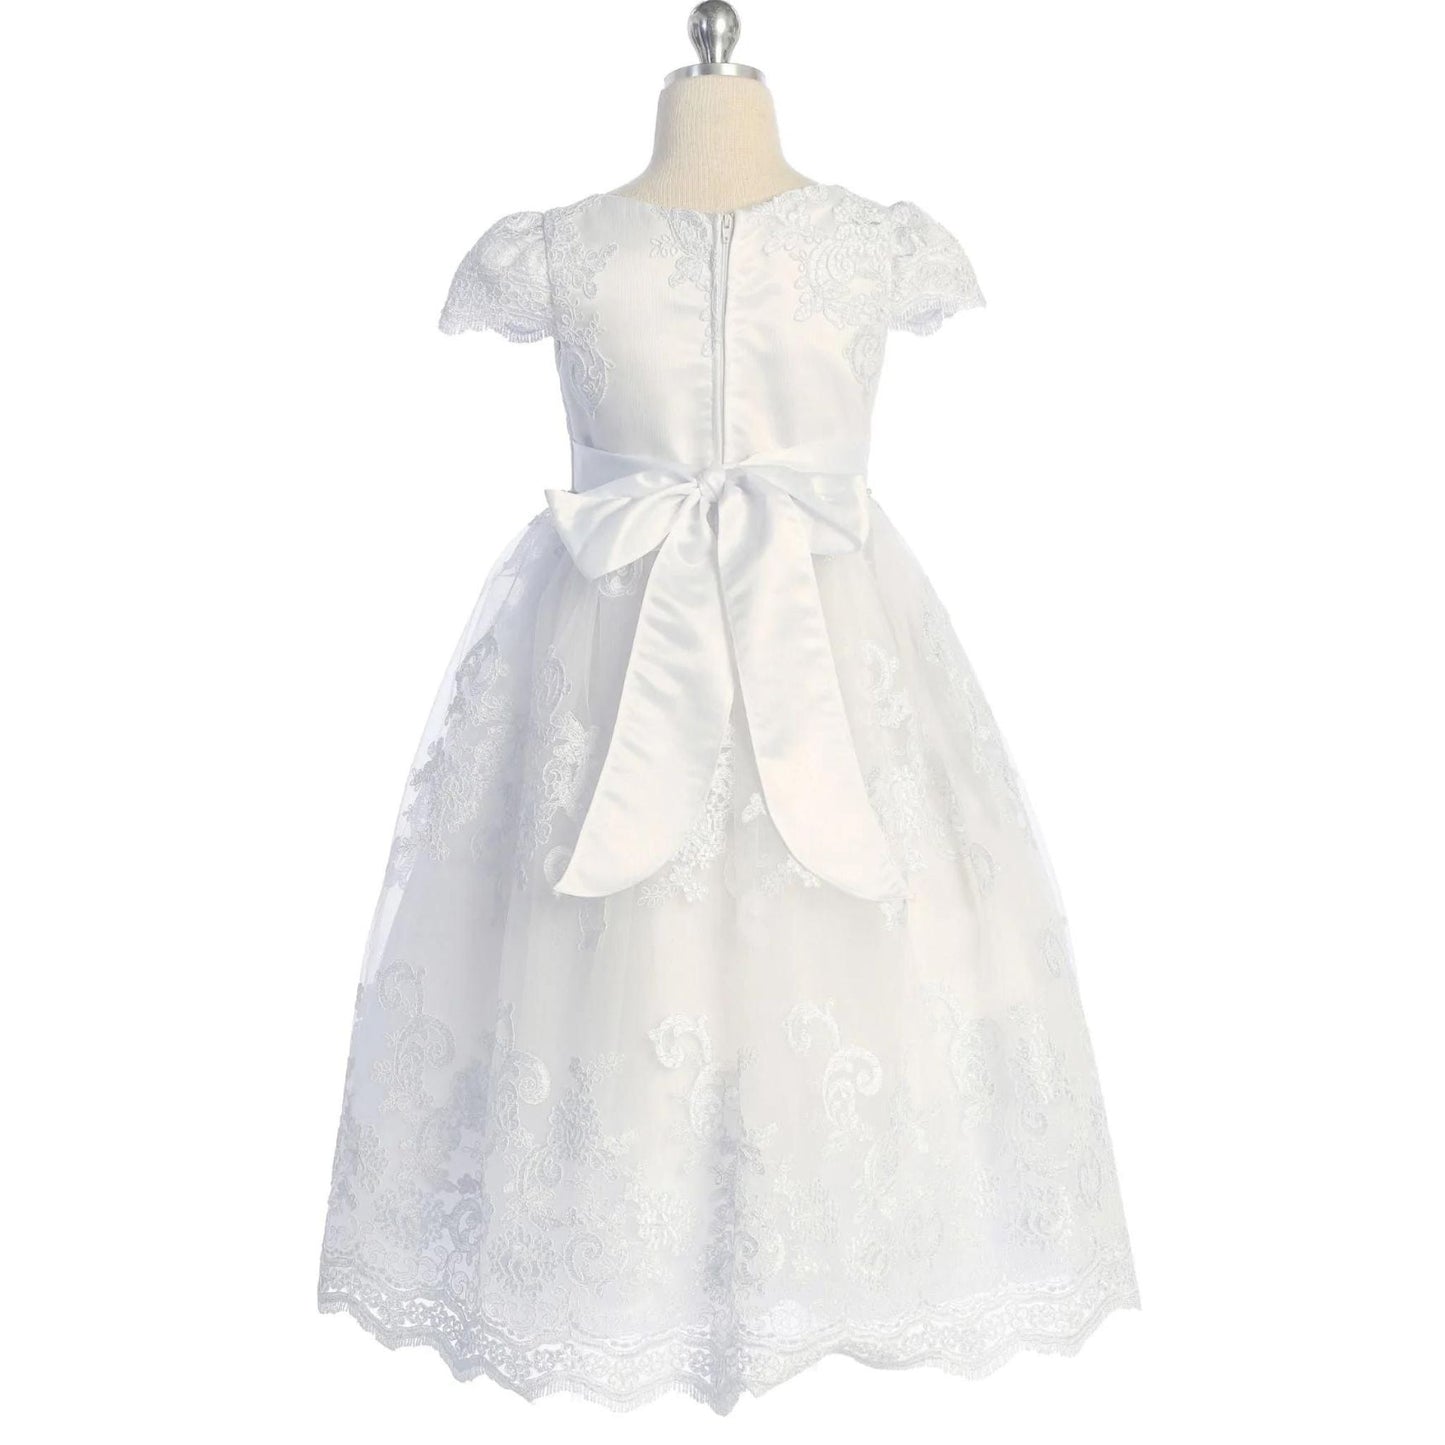 Cording Embellished Lace Sleeve Long Dress Kid's Dream Communion